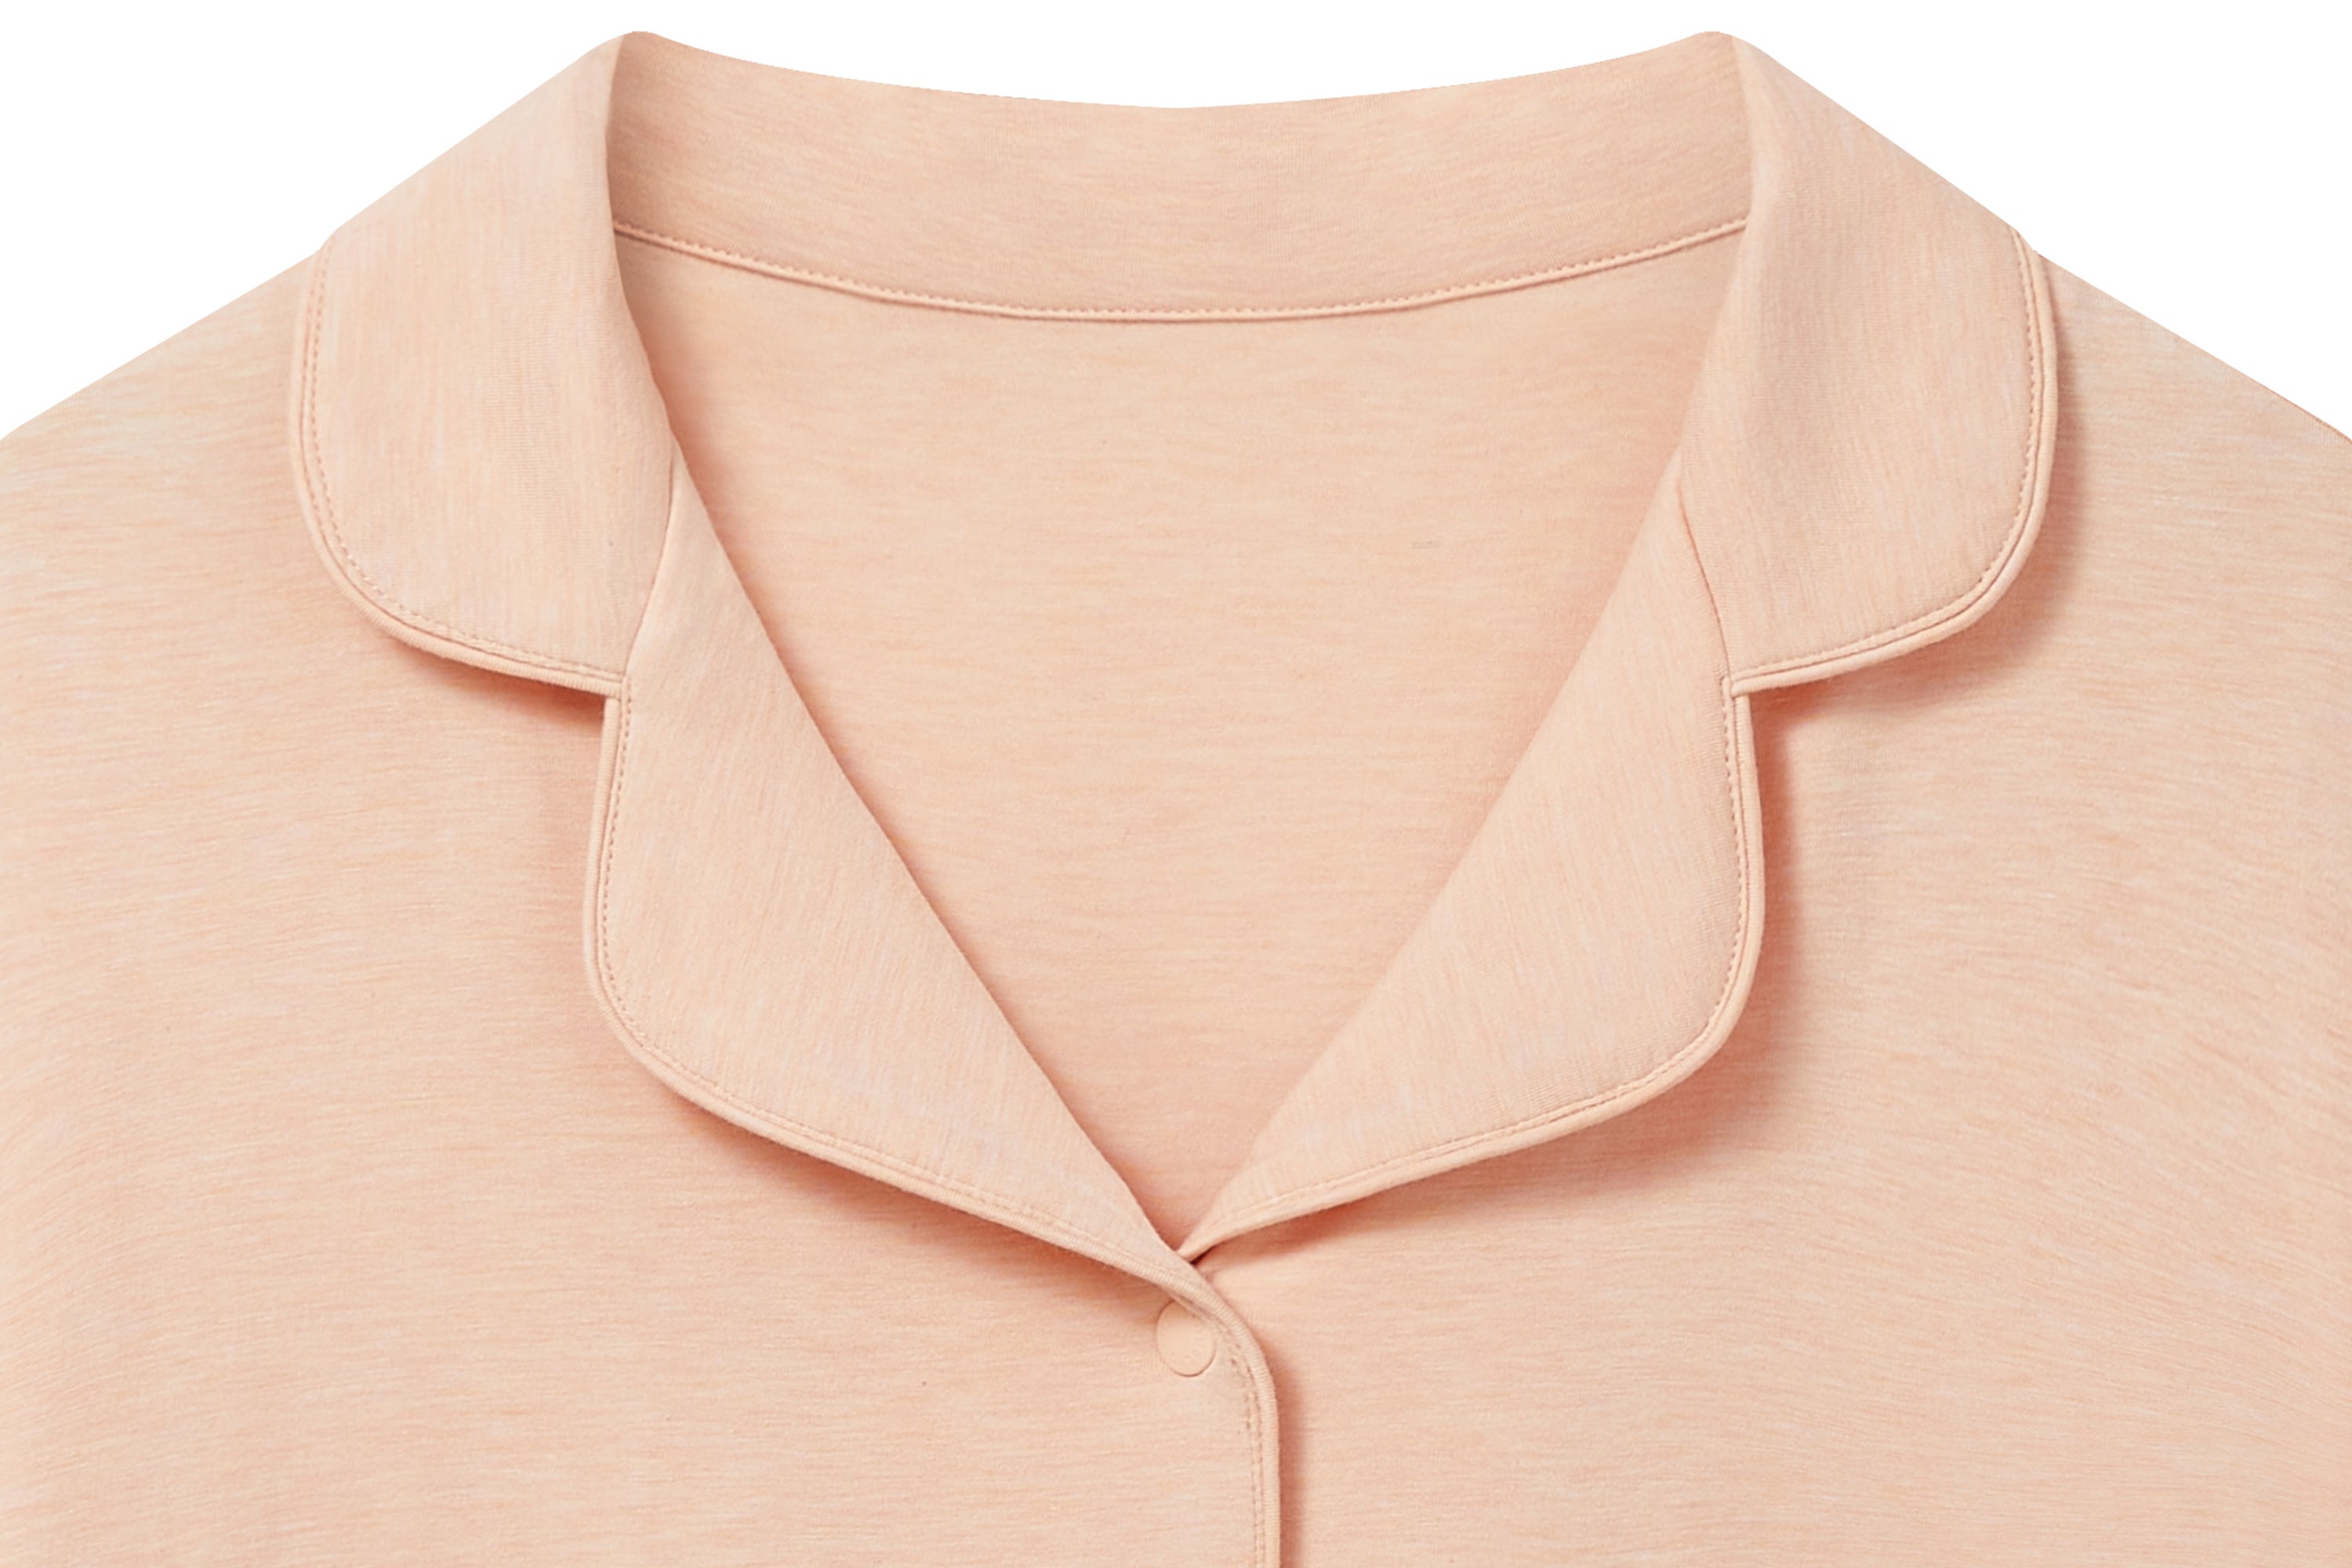 Women's Bamboo Jersey Short Sleeve Button-Up Shirt - Pantone Bellini